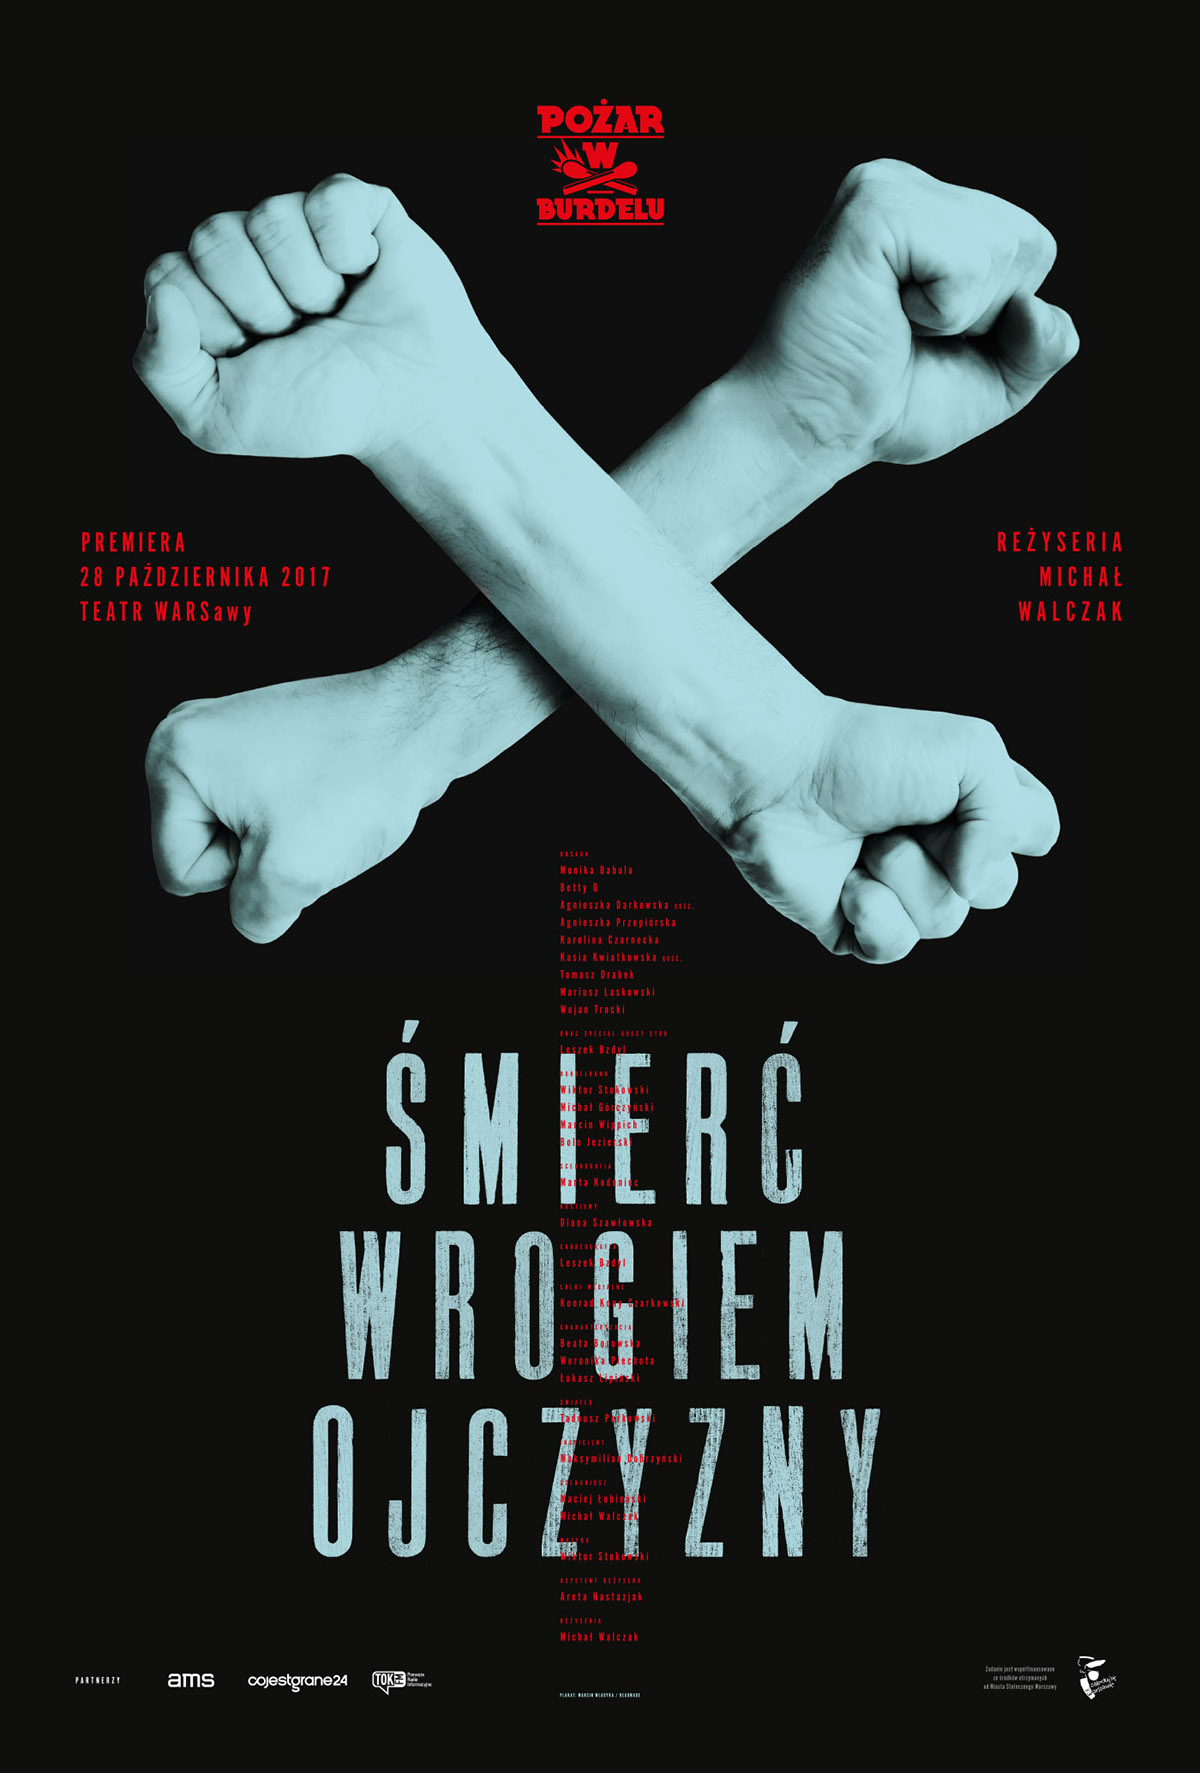 Anti-nationalist poster Theatre fist hand cross death body Władyka